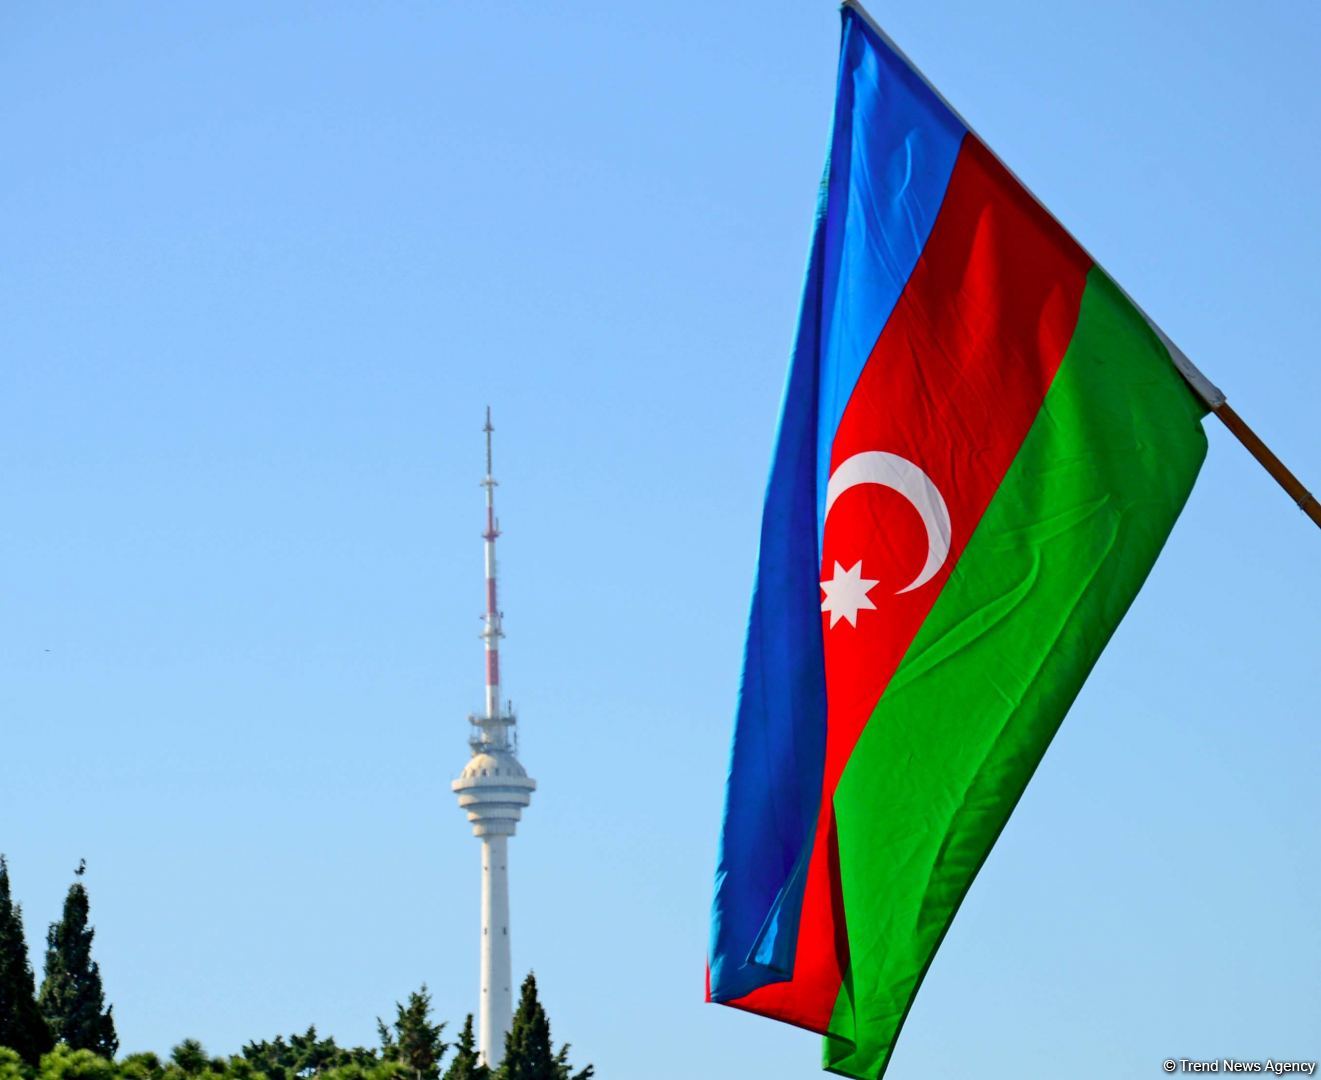 CoE’s Congress of Local and Regional Authorities' report welcomes improvements in Azerbaijan